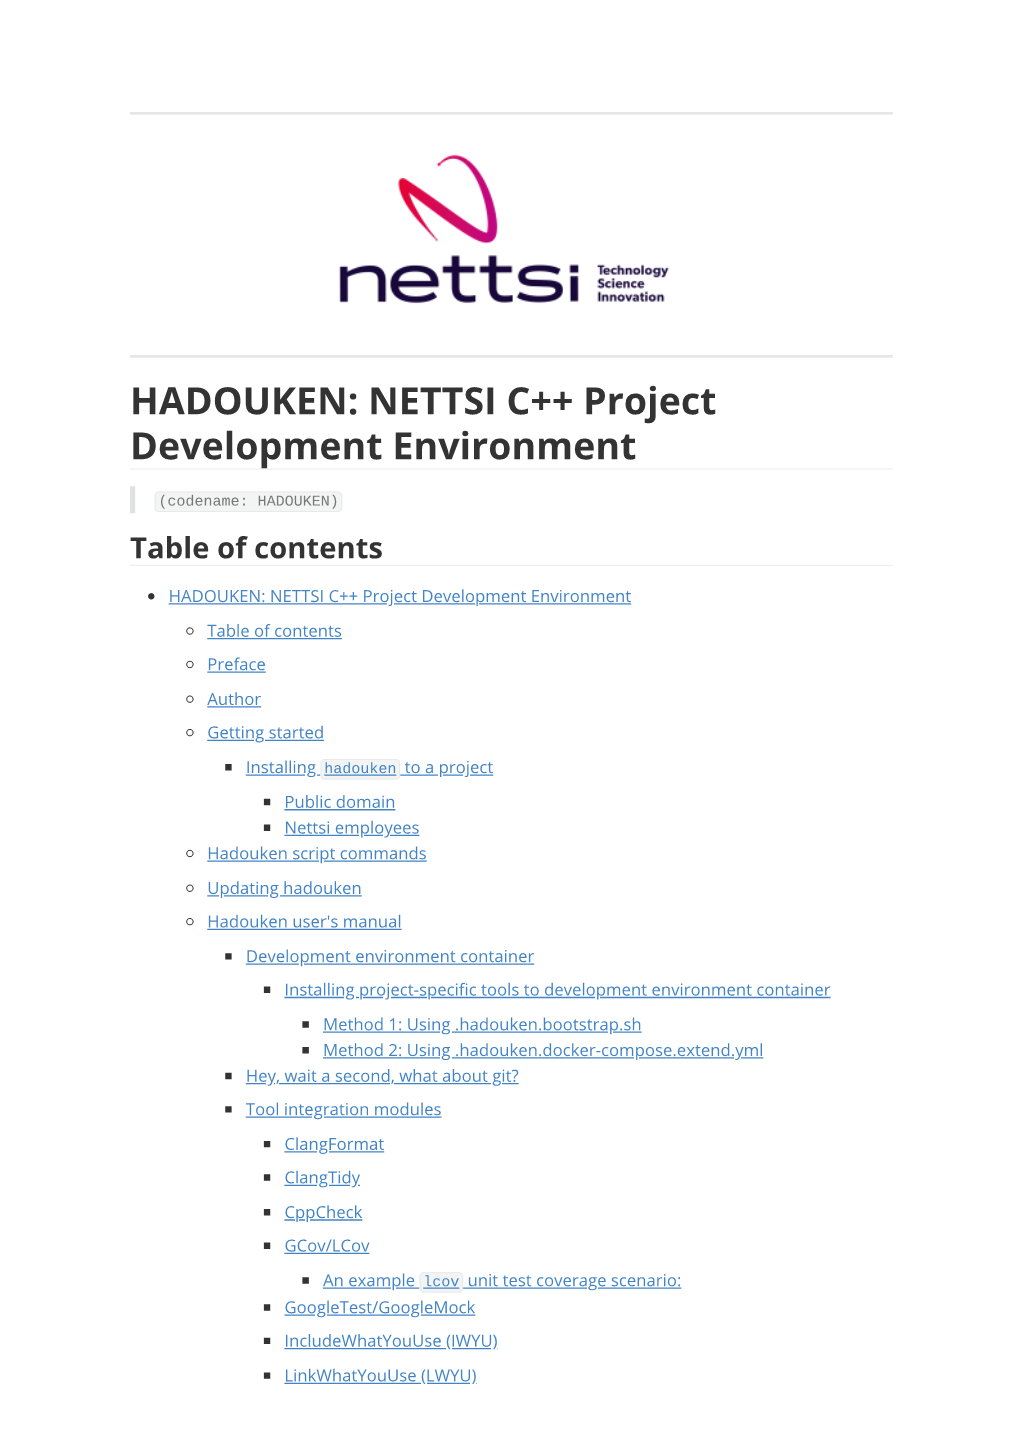 HADOUKEN: NETTSI C++ Project Development Environment